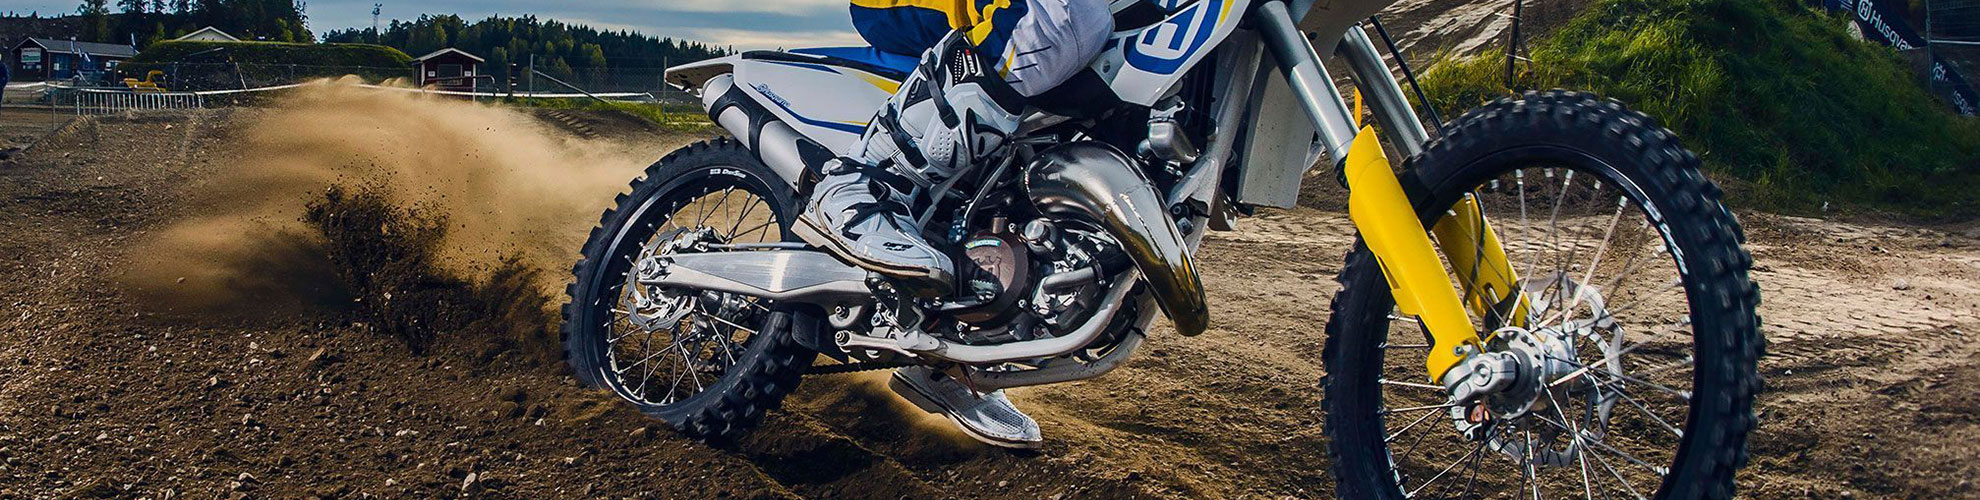 MXRP - Motocycle Suspension